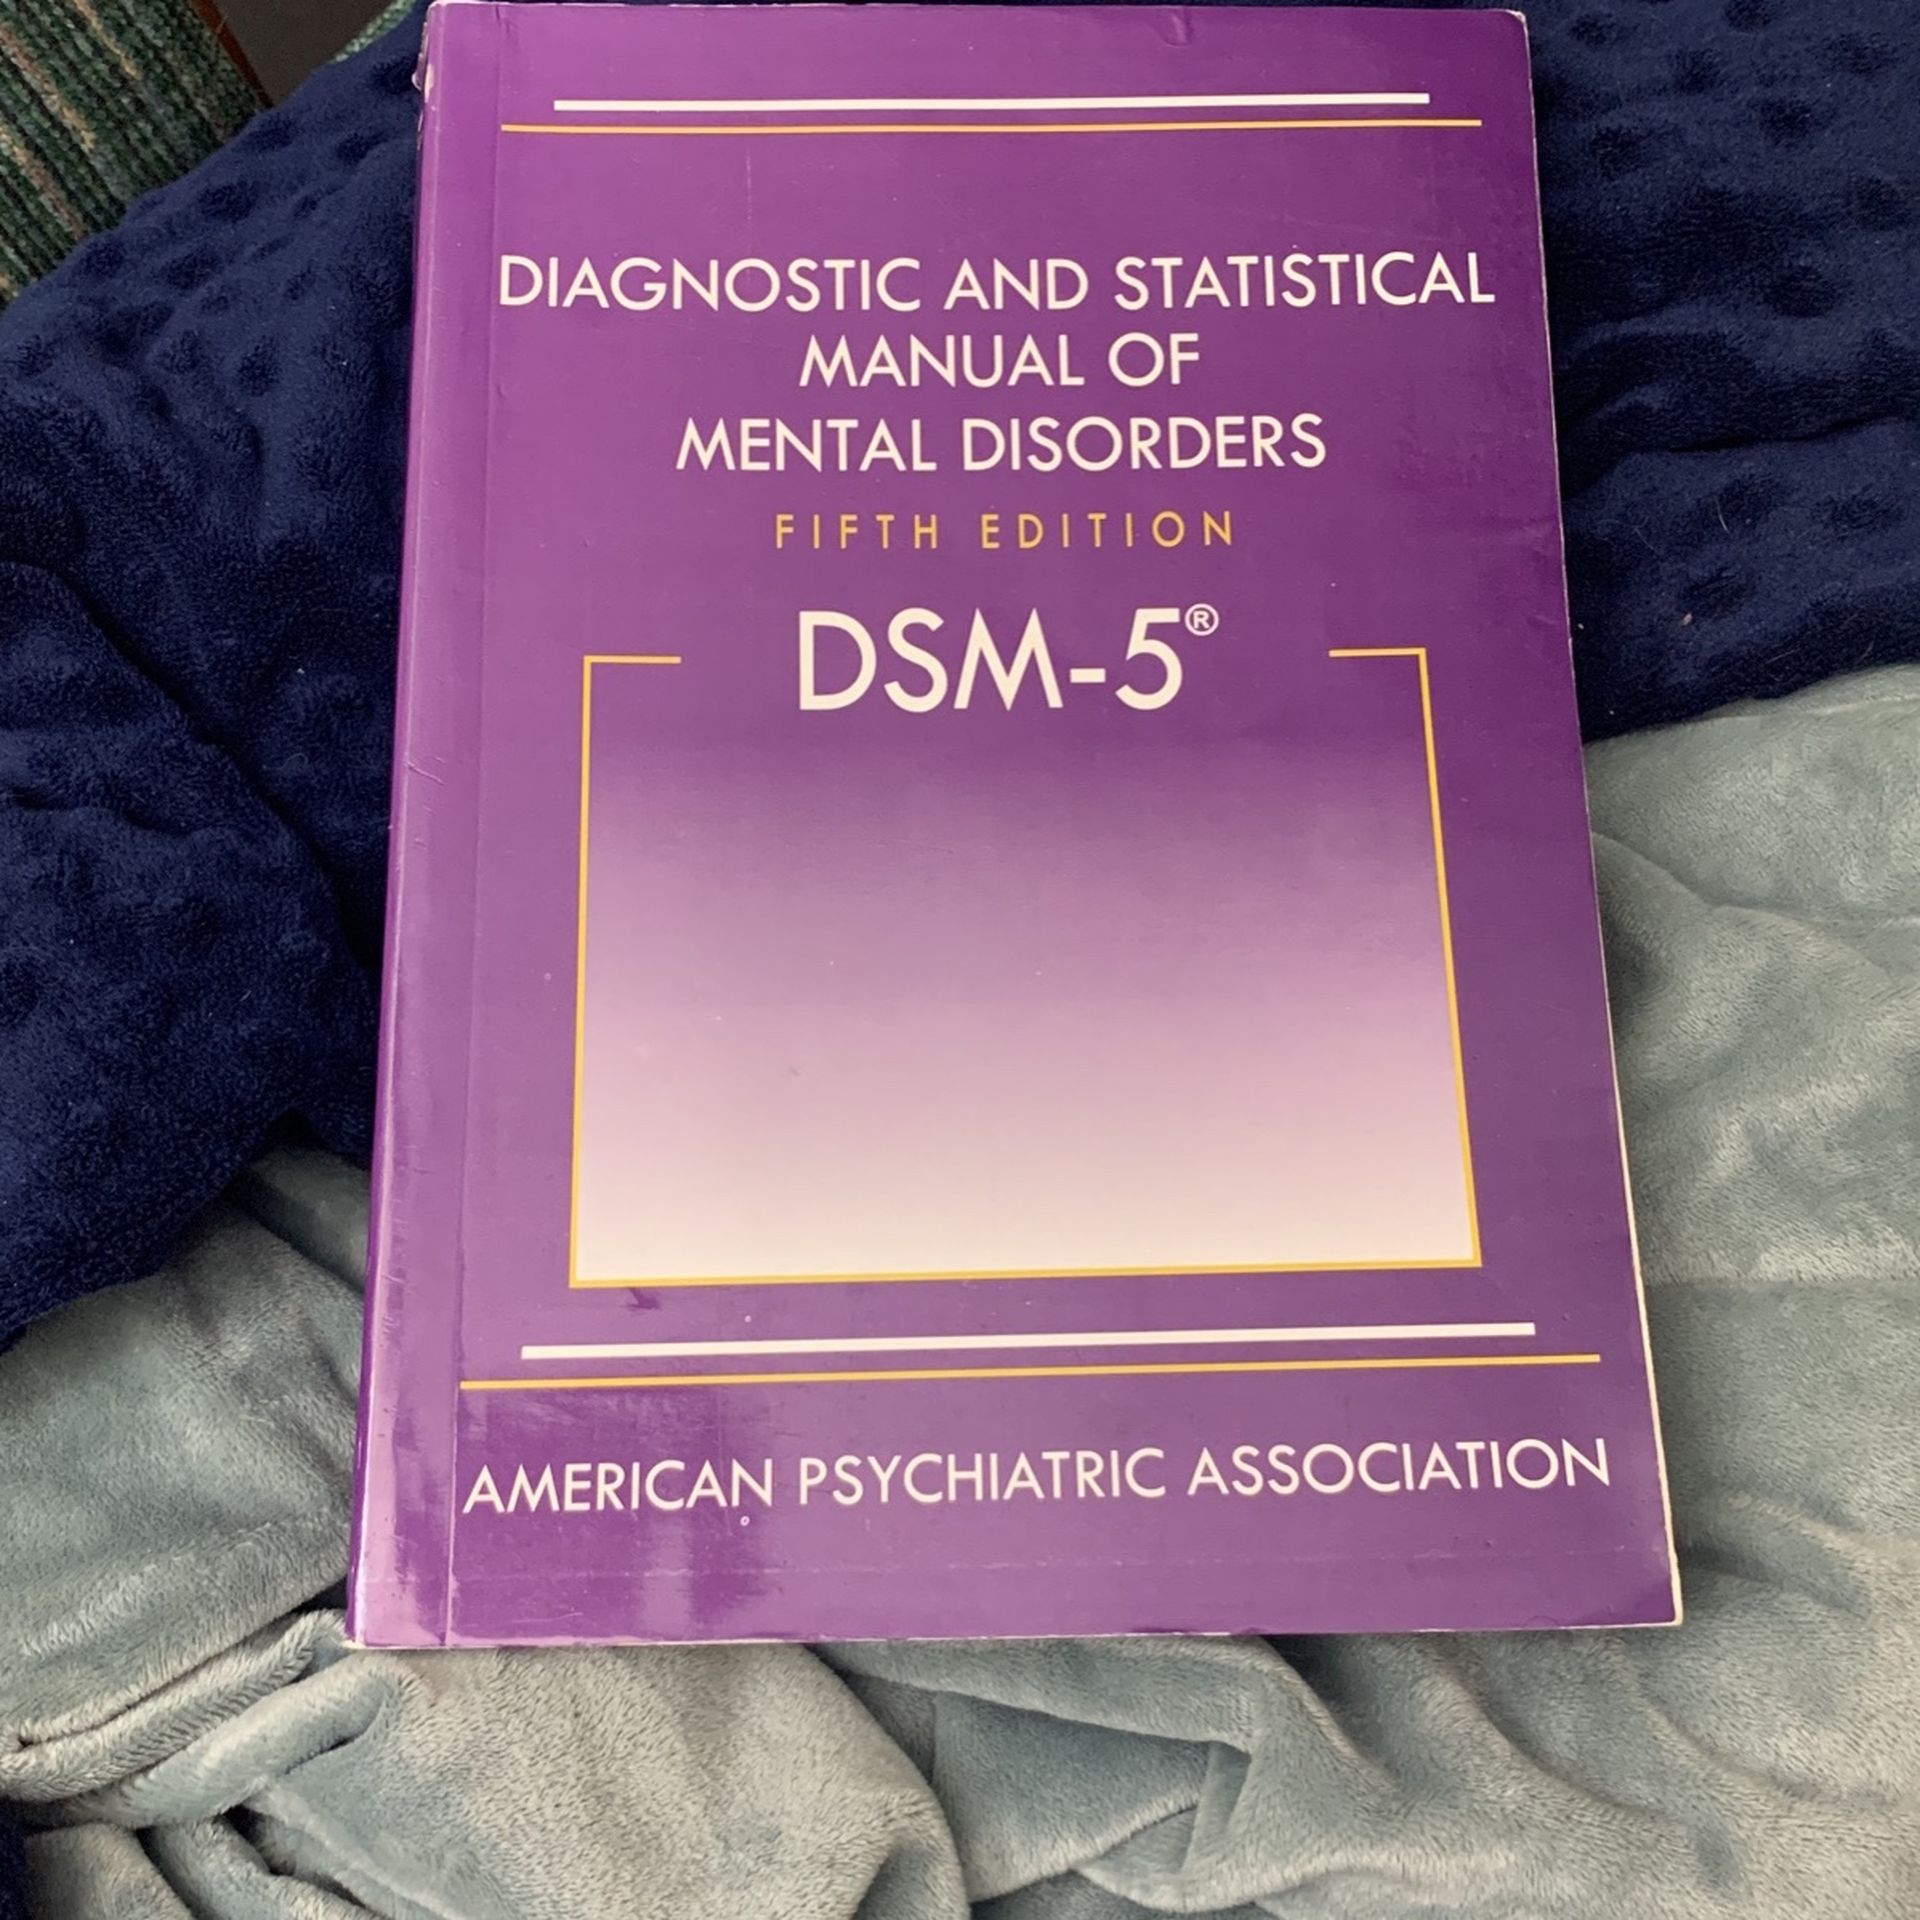 DSM-5 (used)